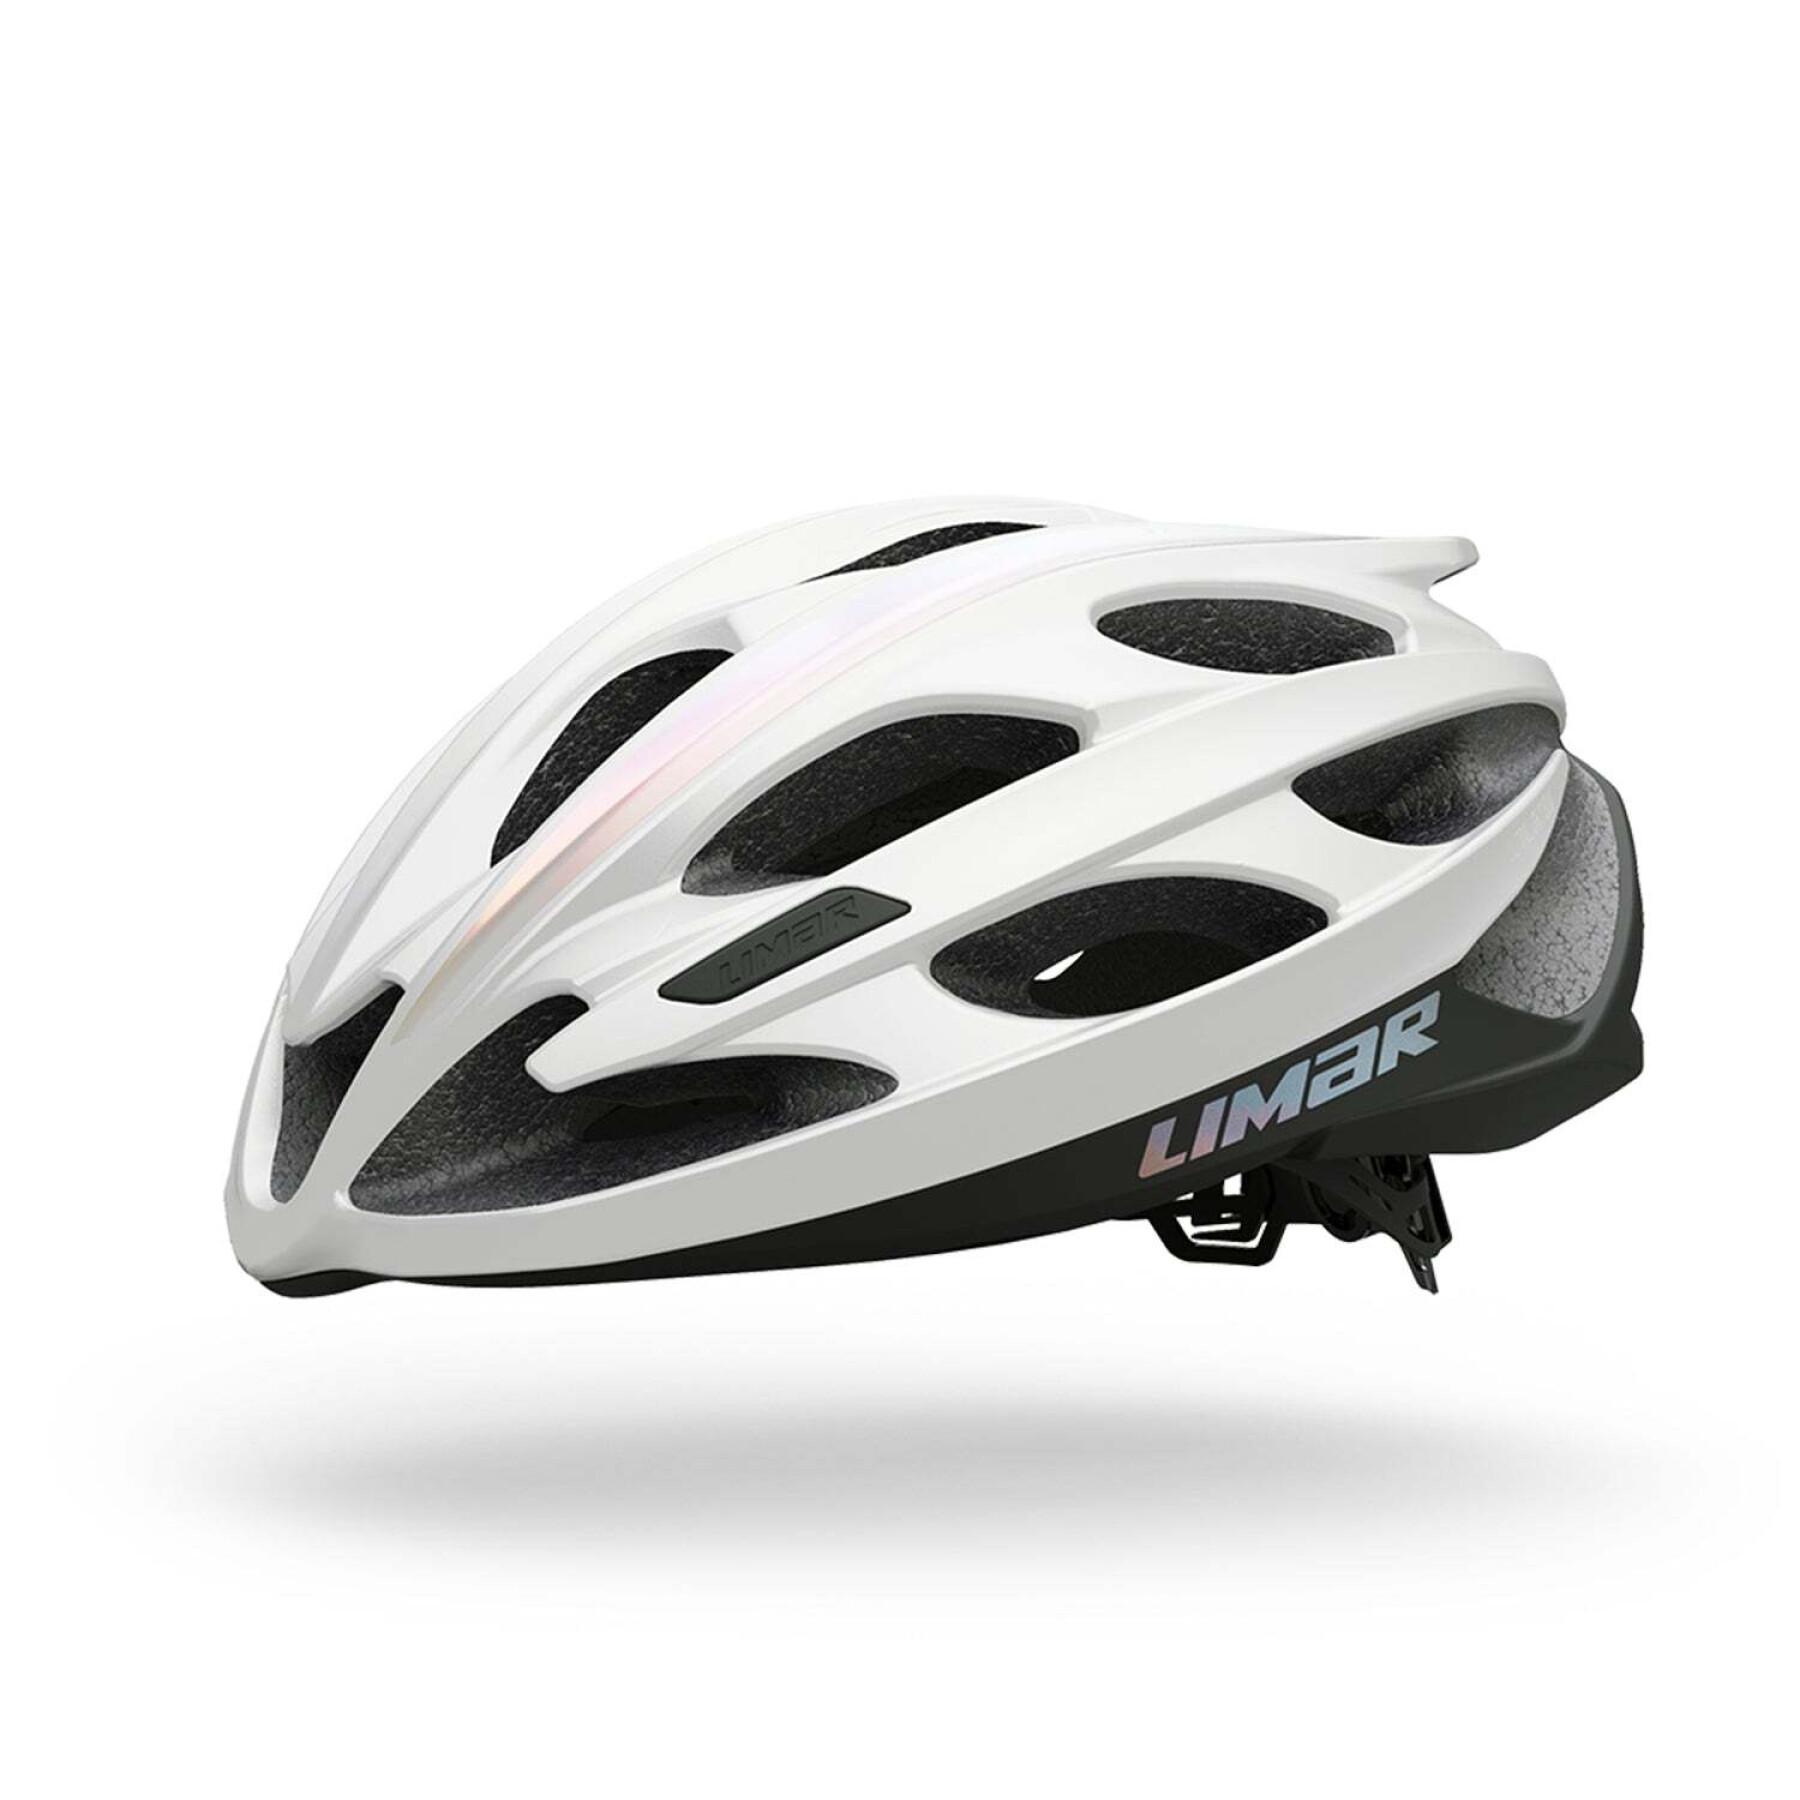 Road bike helmet Limar Ultralight Evo